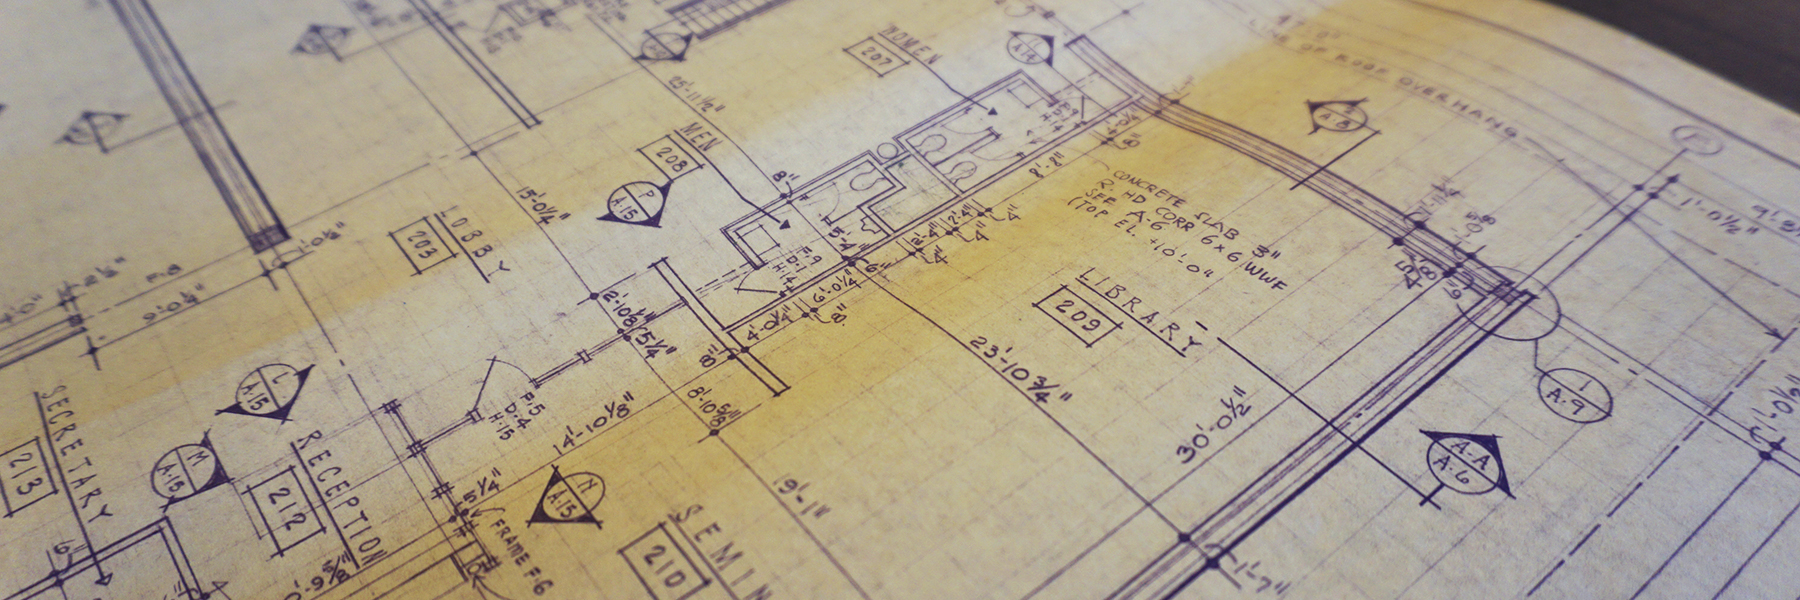 A close up view of blueprints. 